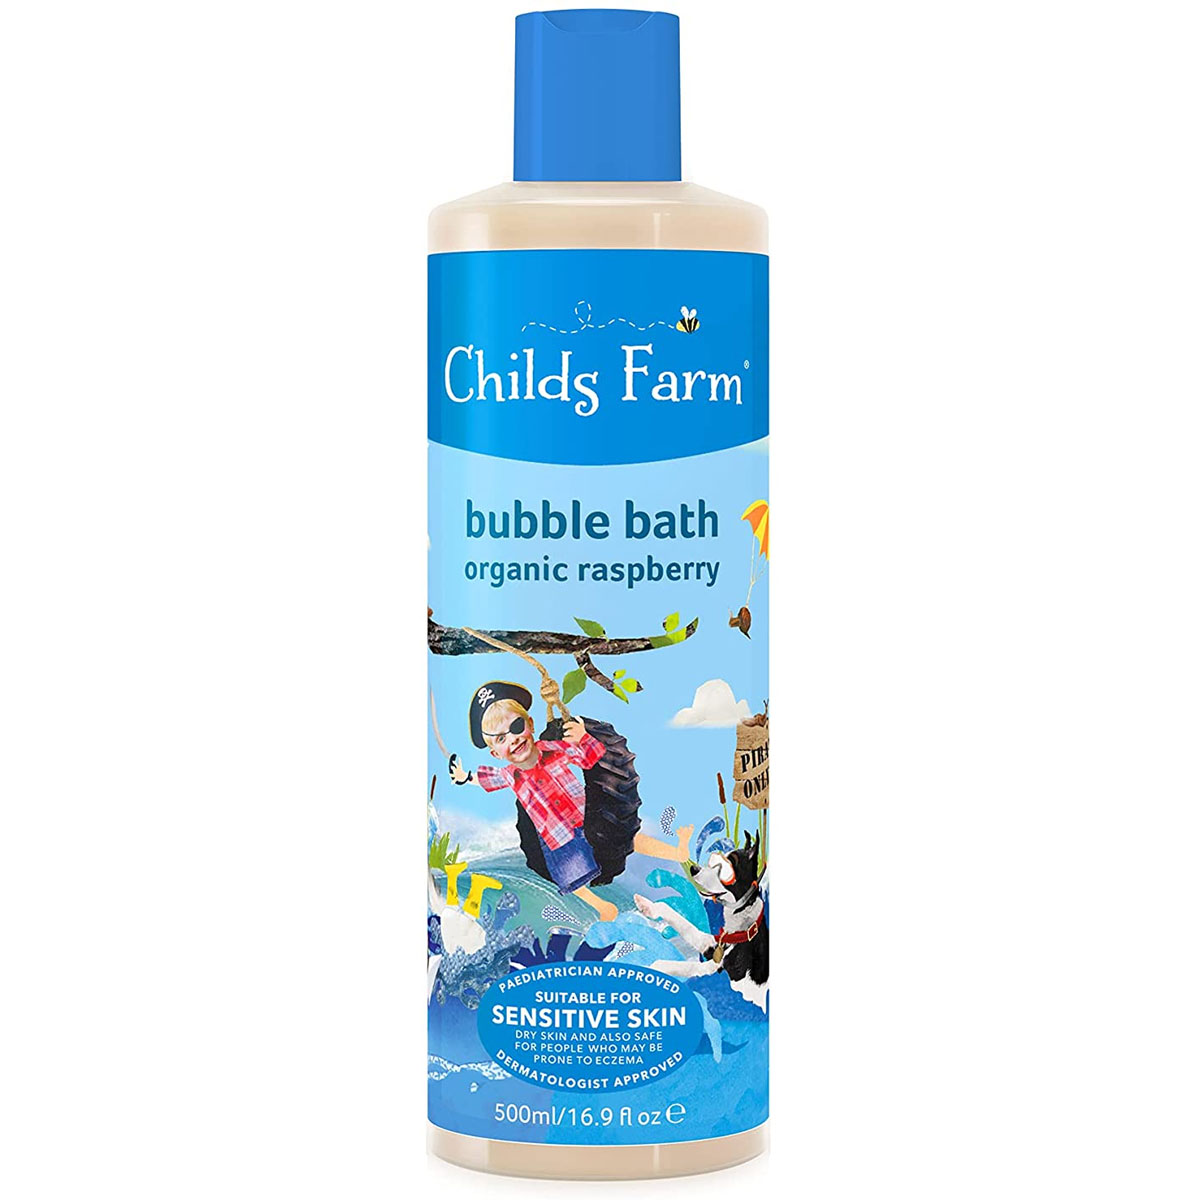 Childs Farm Organic Raspberry Bubble Bath 500ml